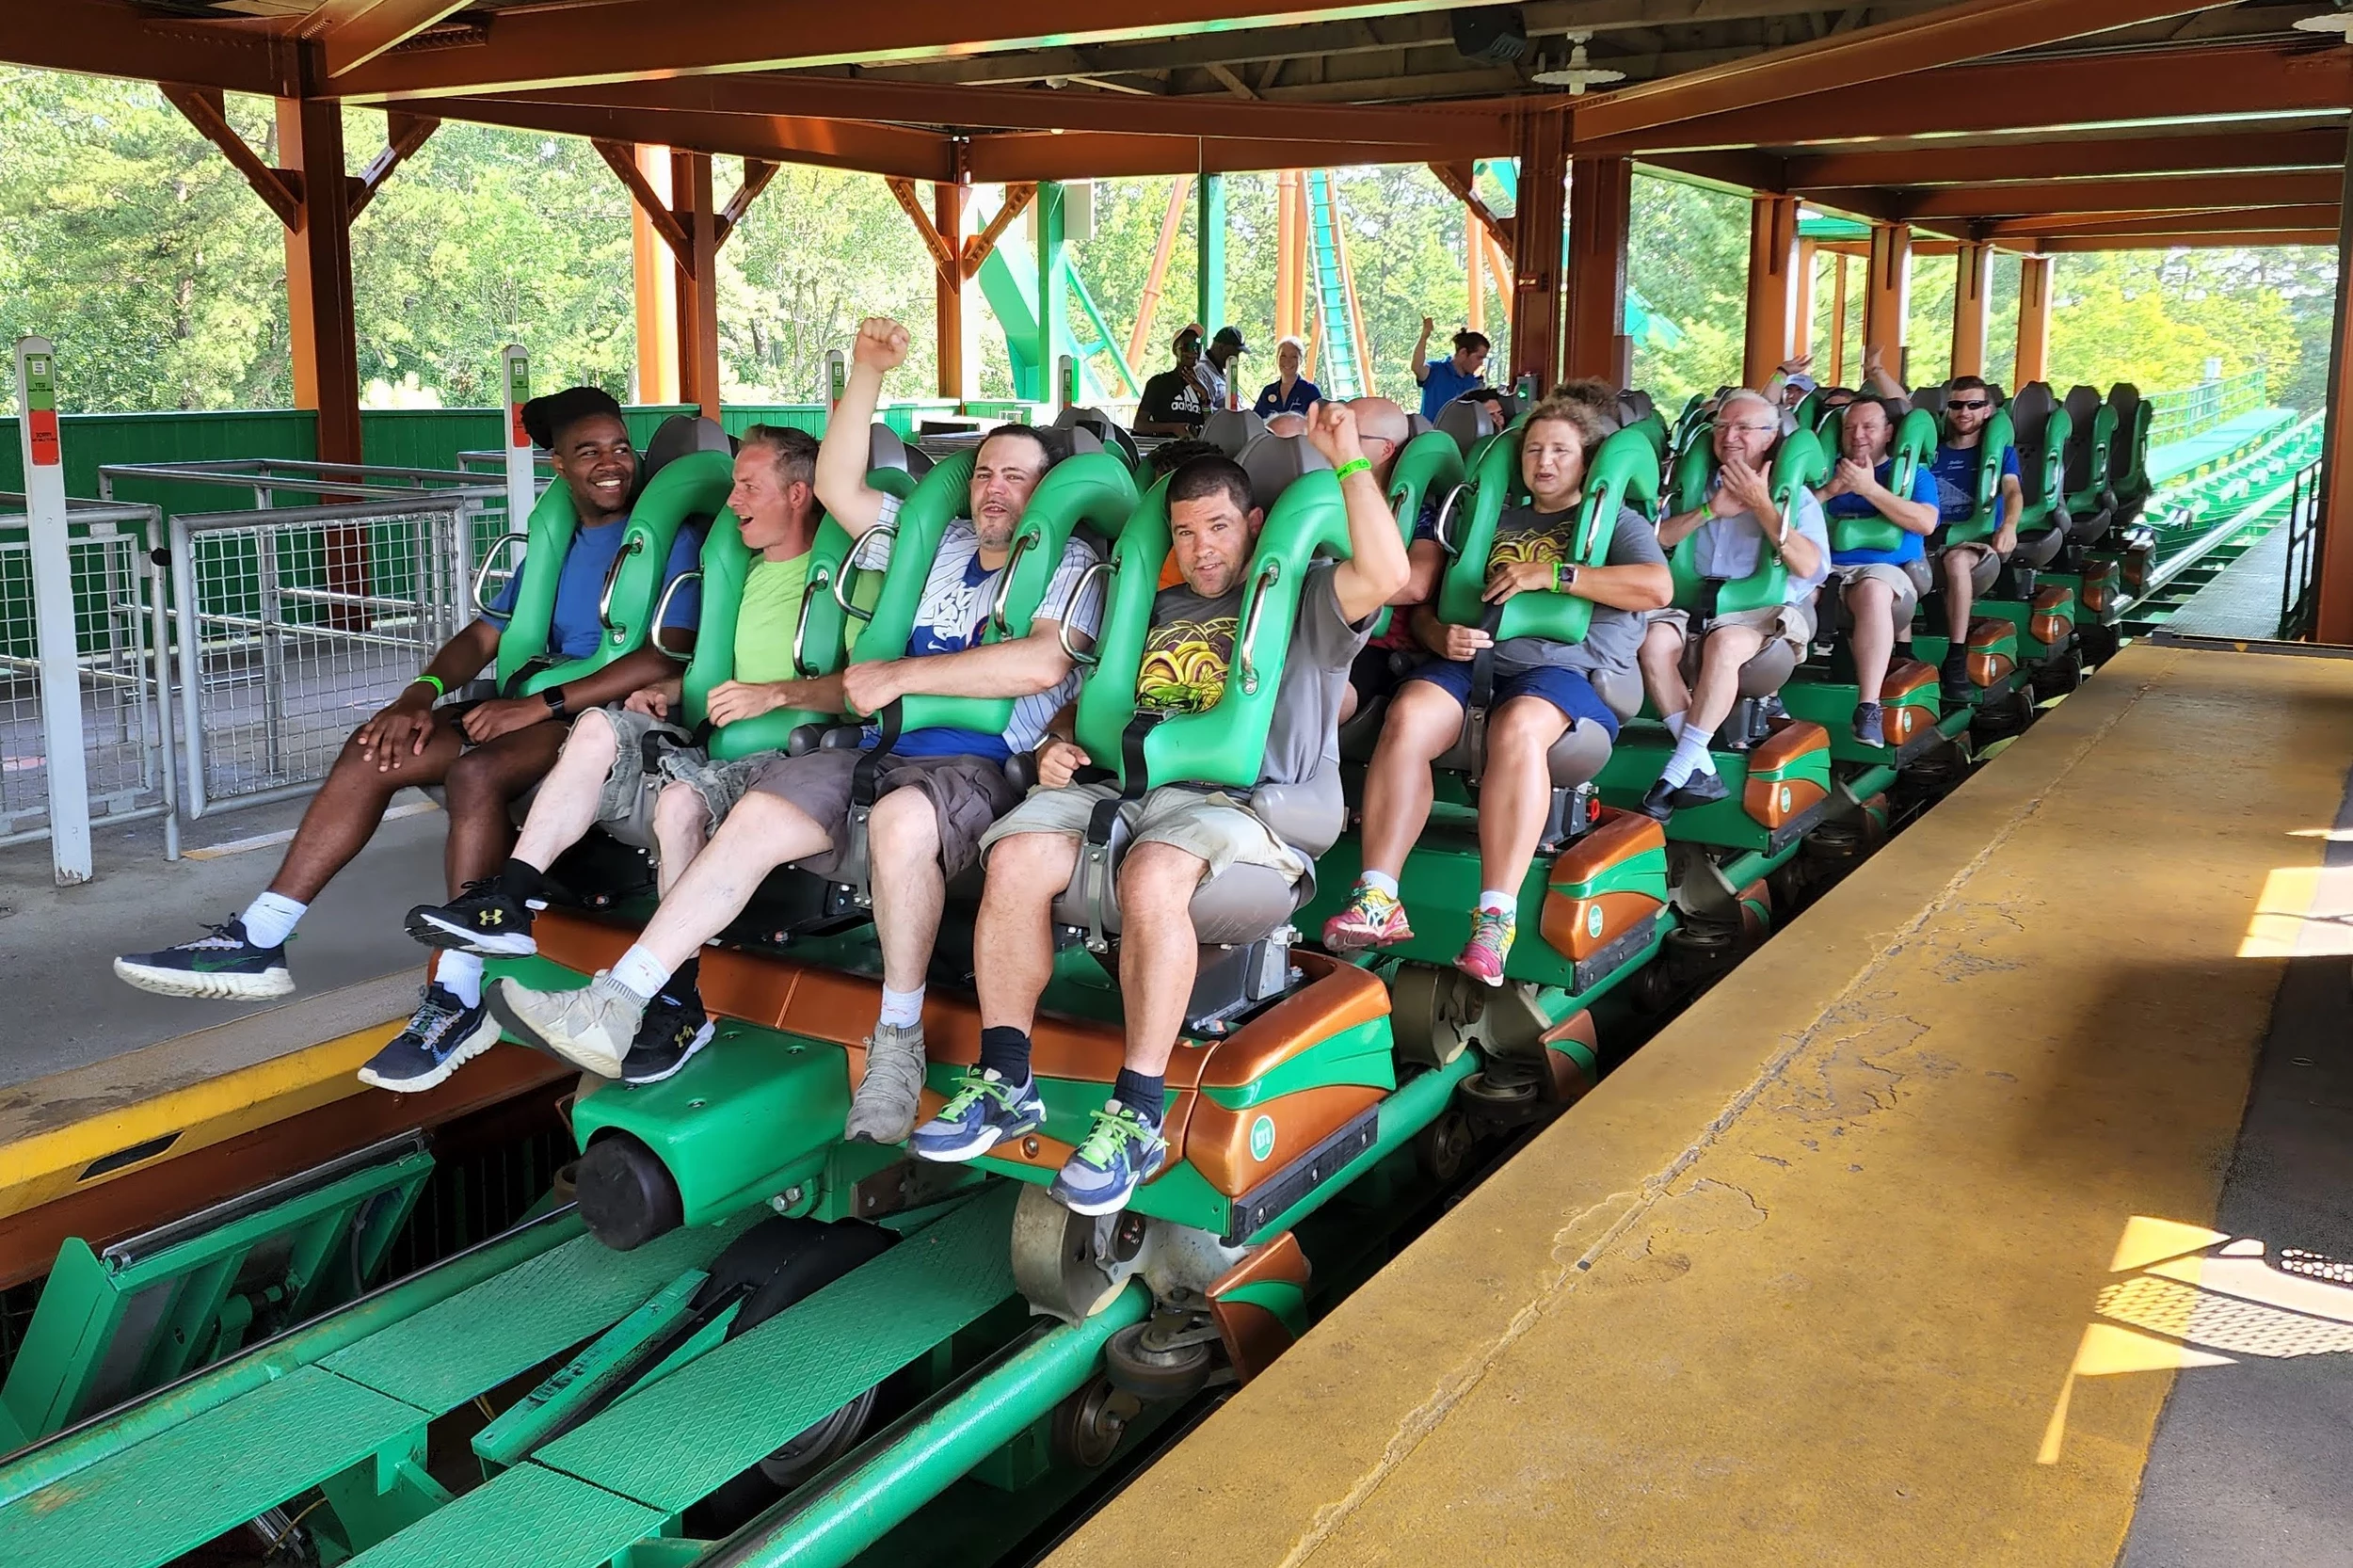 THE DARK KNIGHT Coaster - Six Flags Great Adventure